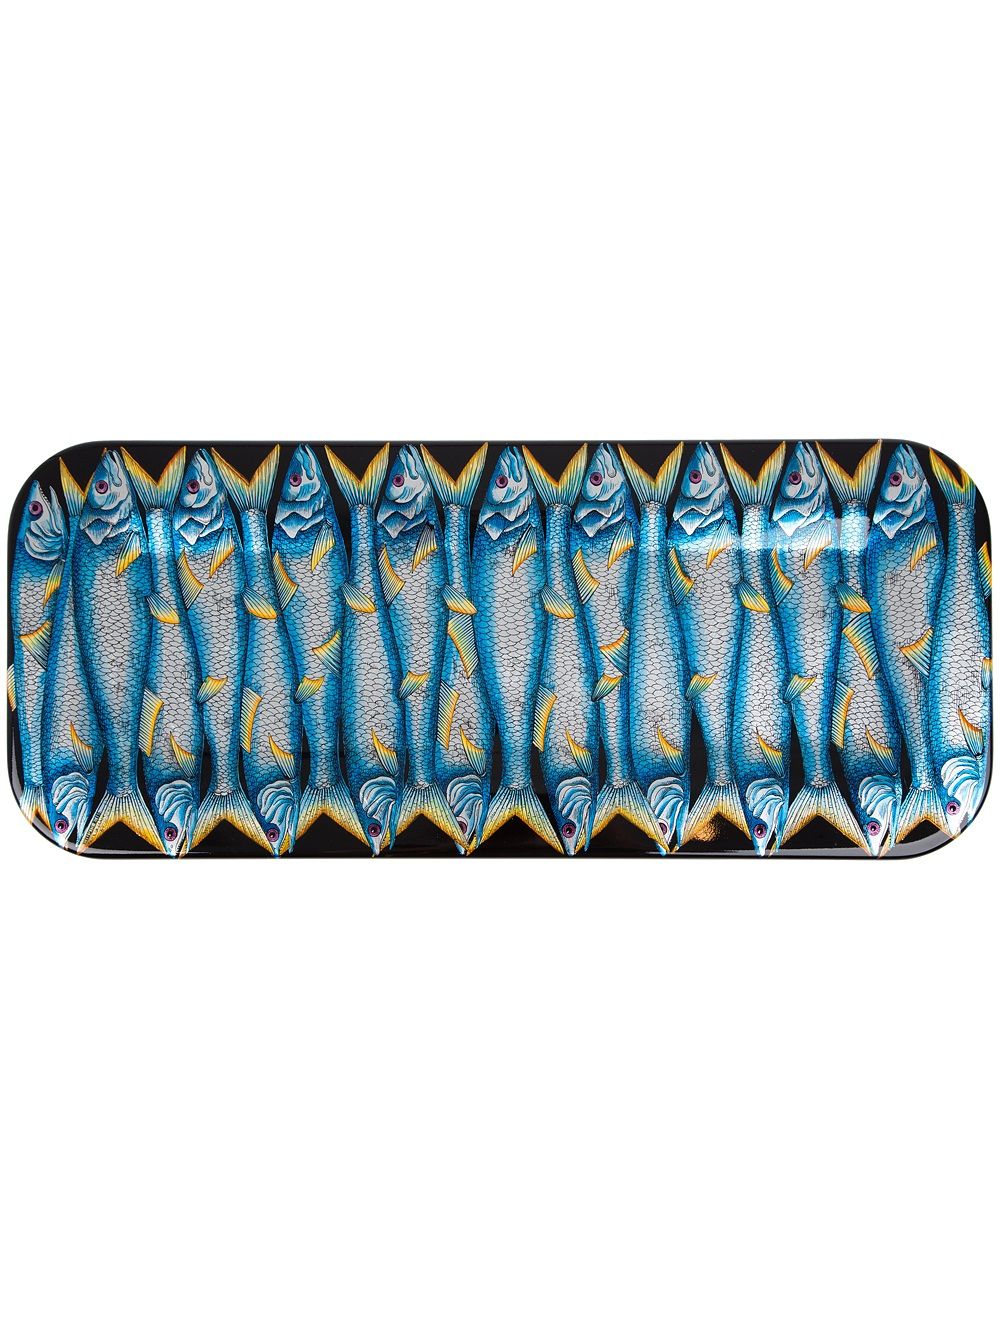 Fornasetti Sardine tray - Blue von Fornasetti